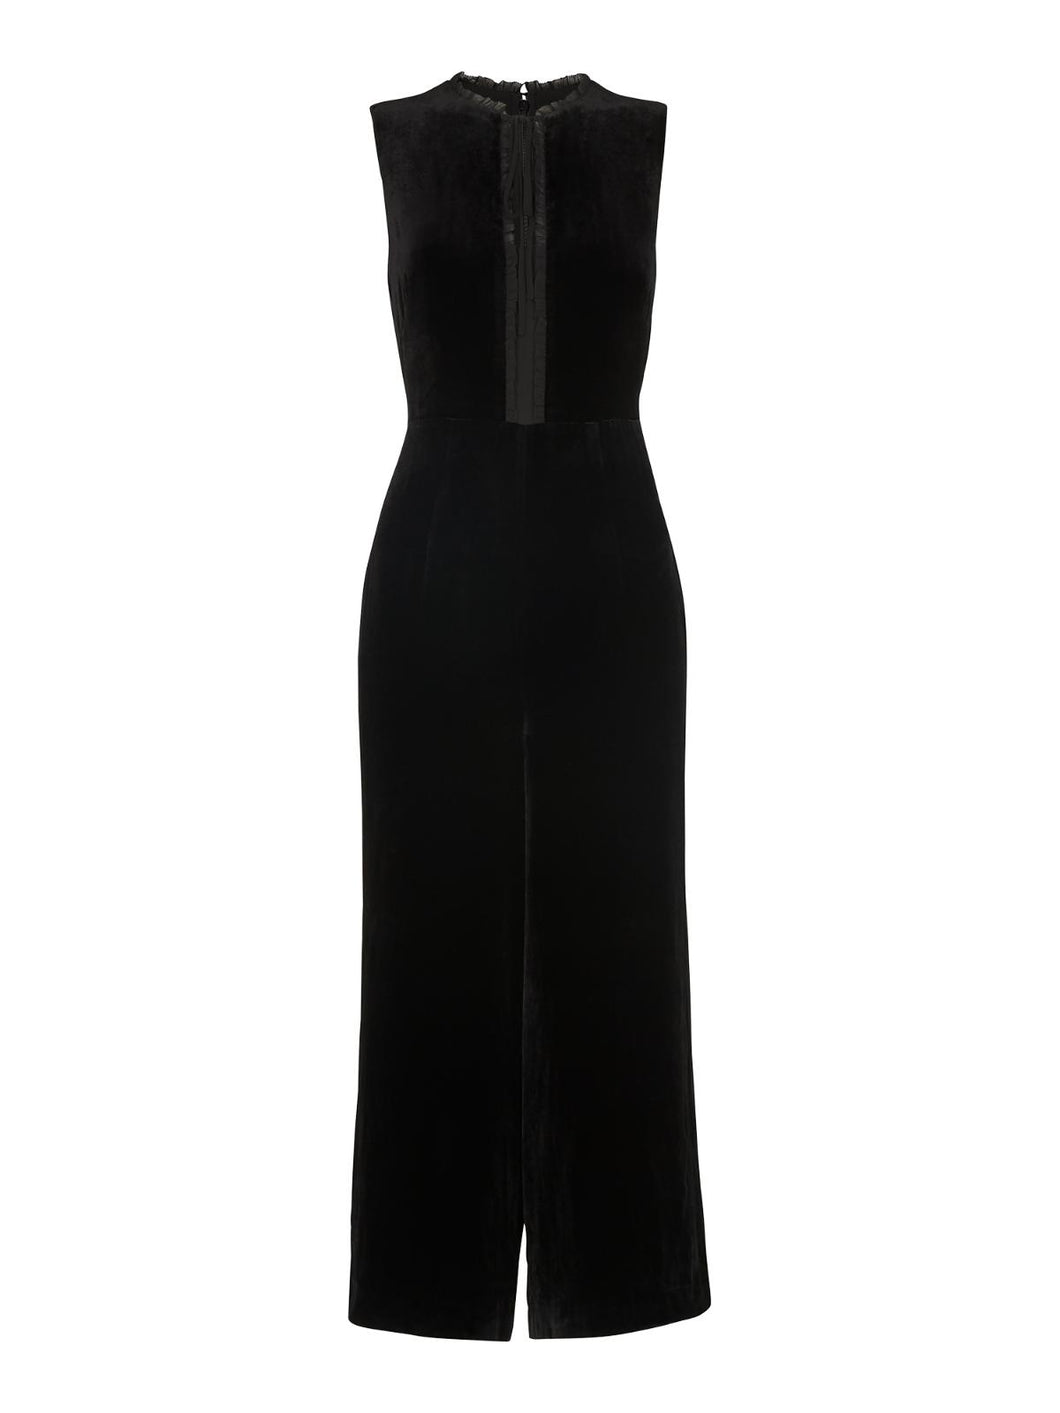 WHISTLES Ladies Black Sleeveless Florrie Silk Mix Jumpsuit UK6 RRP199 NEW